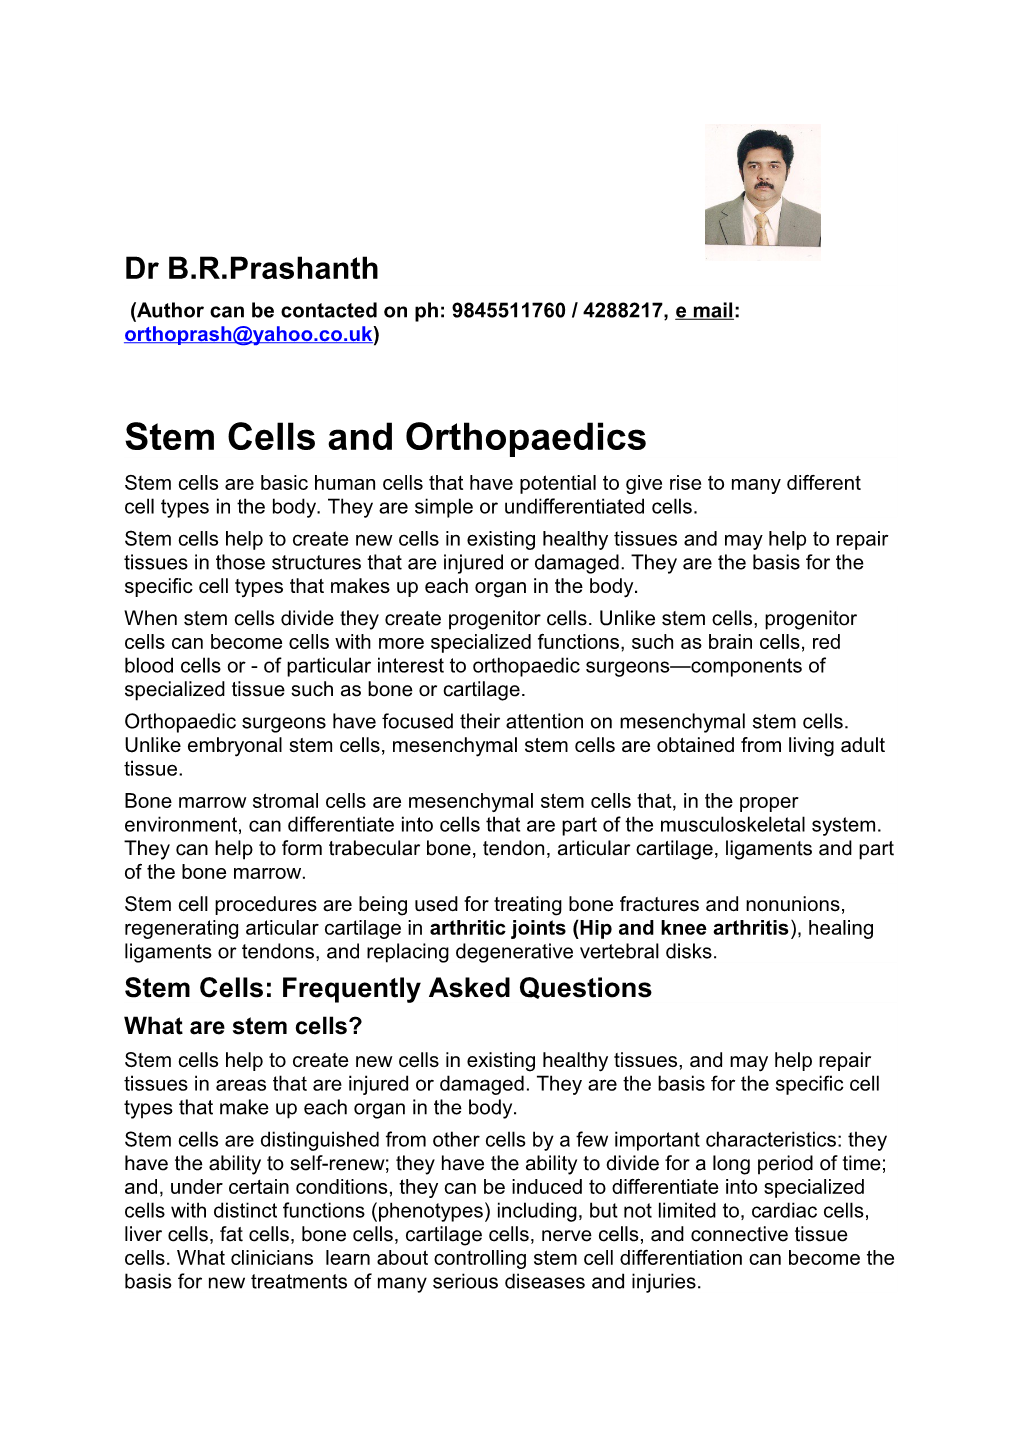 Stem Cells and Orthopaedics